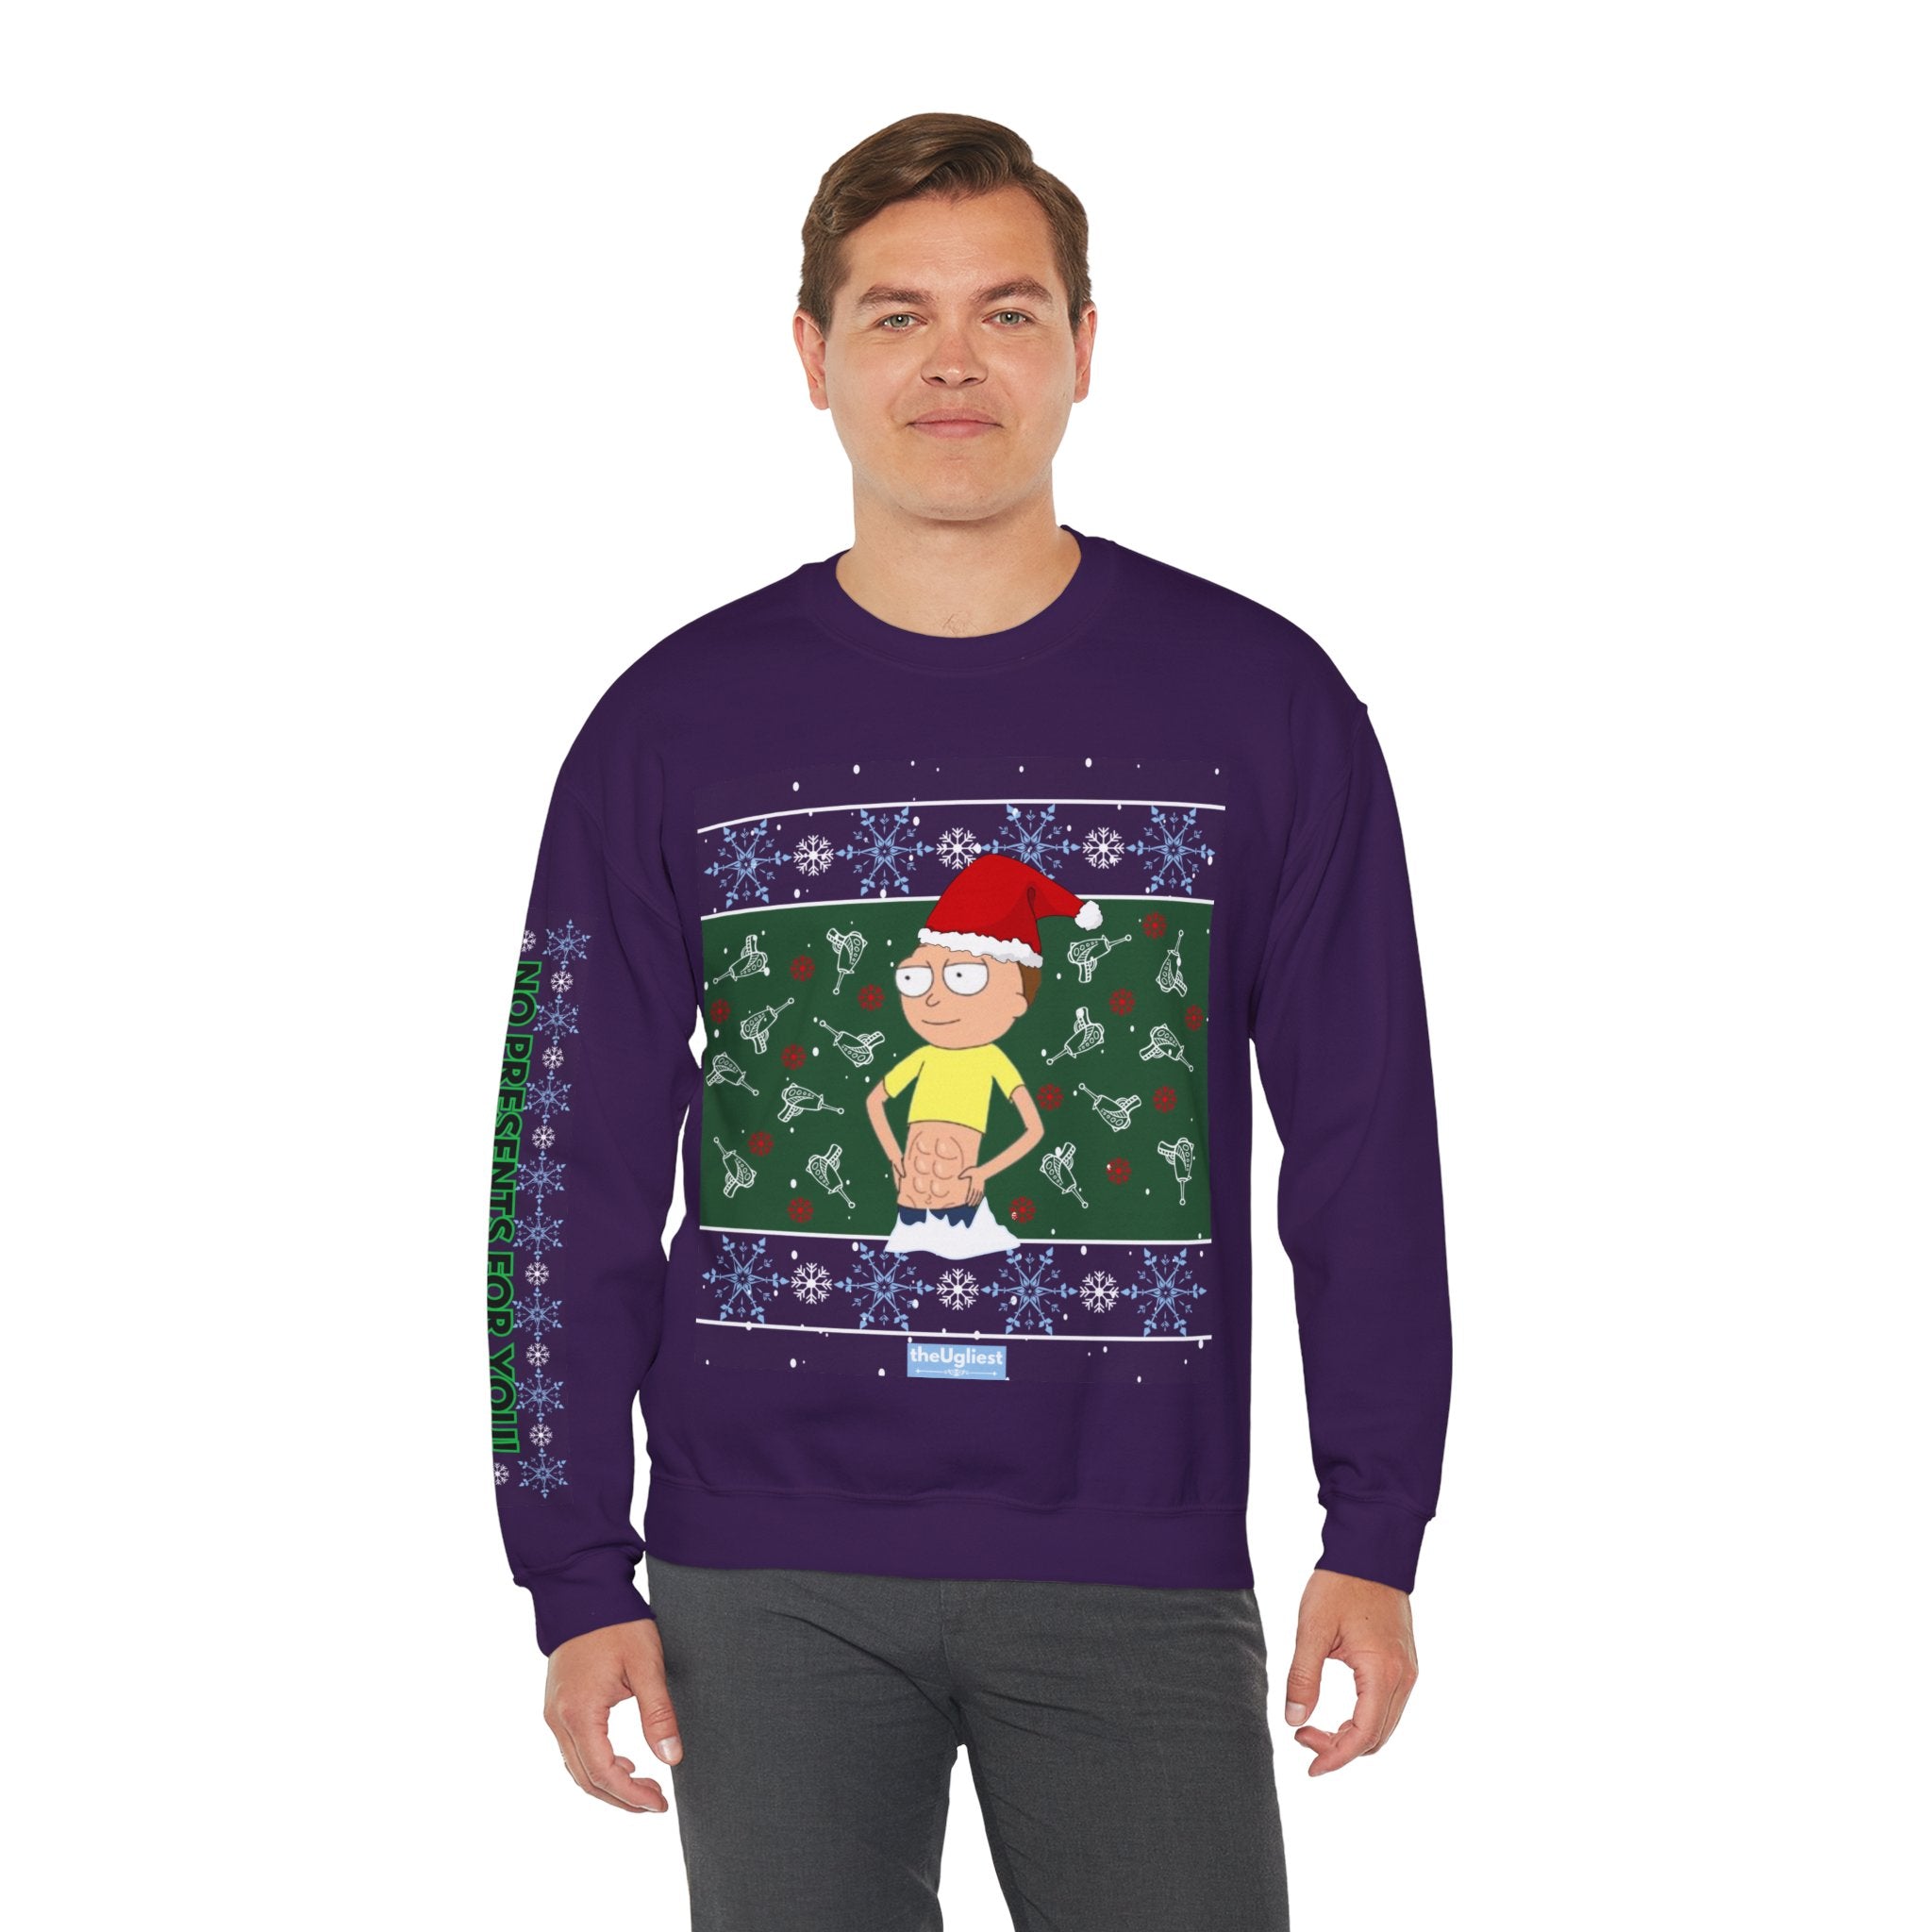 Santa-Morty Sweater